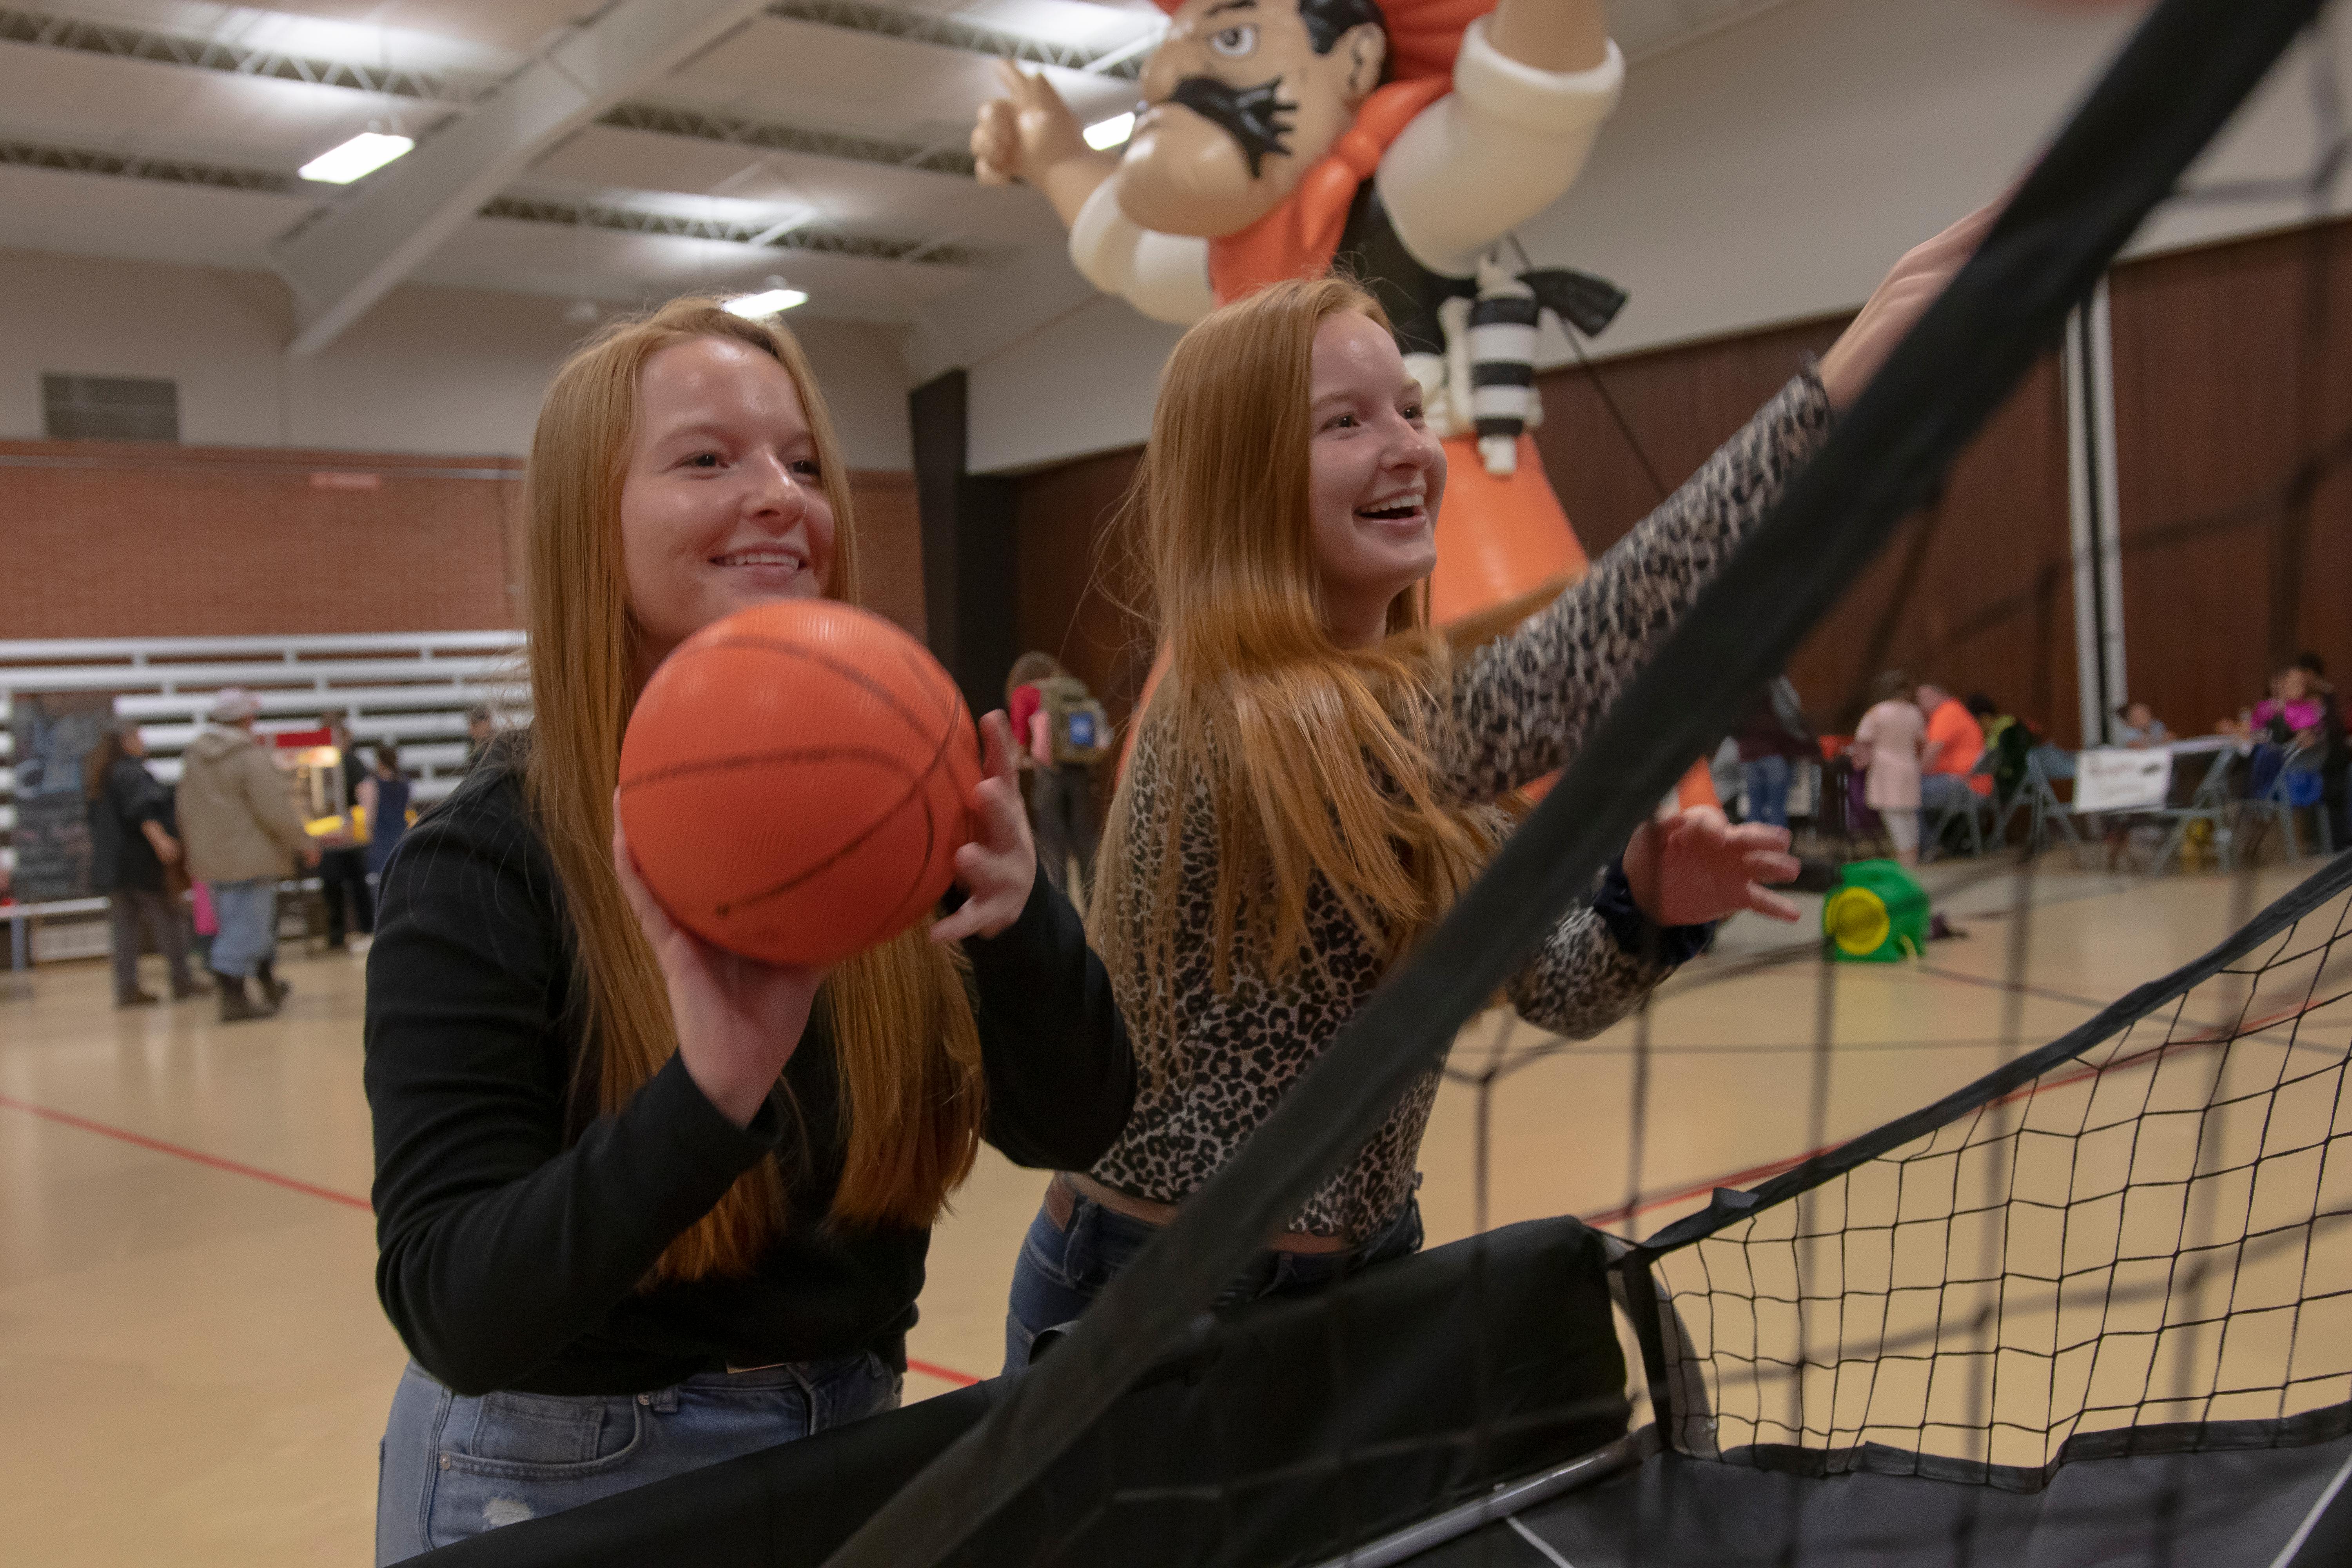 OSUIT Students playing basketball at Carnifall